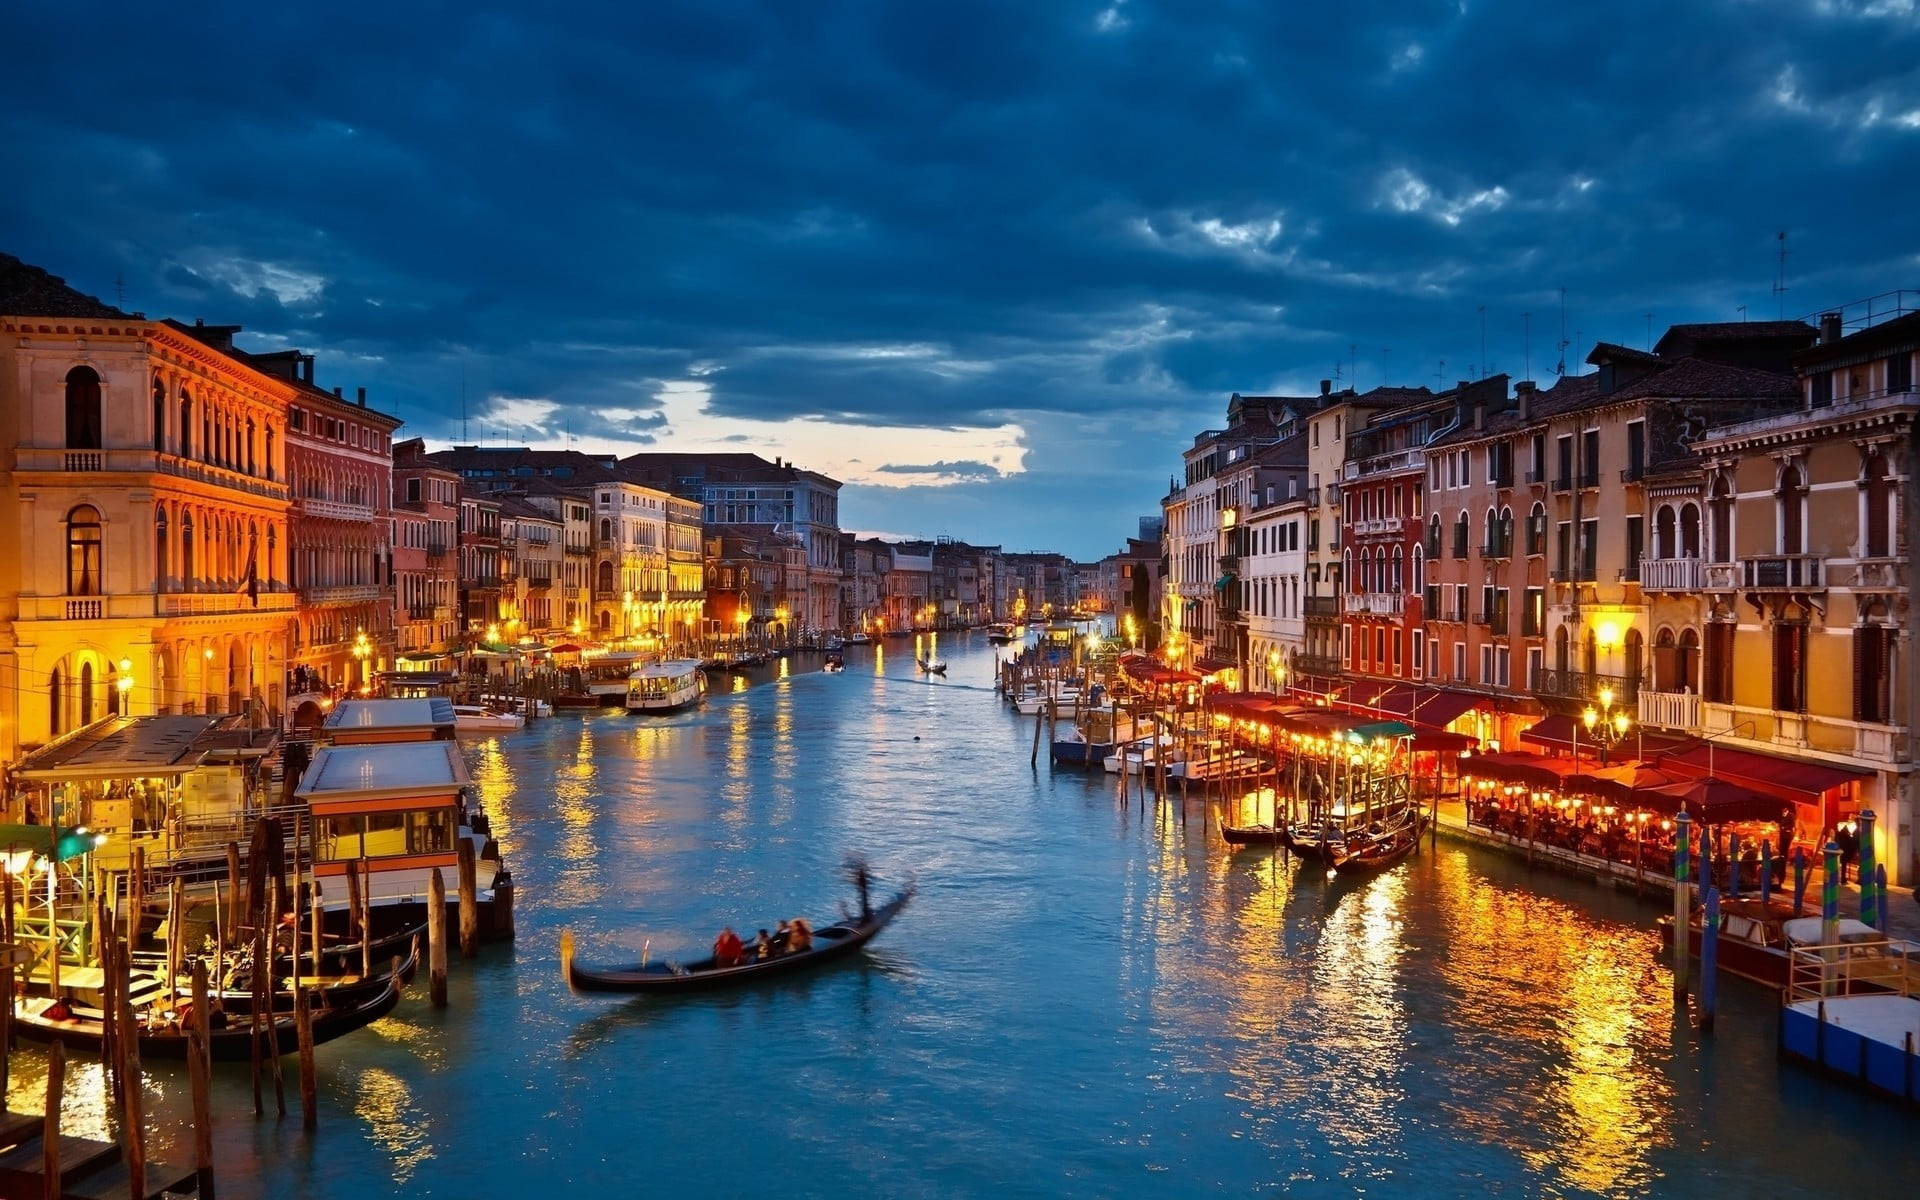 Grand Canal, Venice, cityscape, gondolas, lights, building, clouds